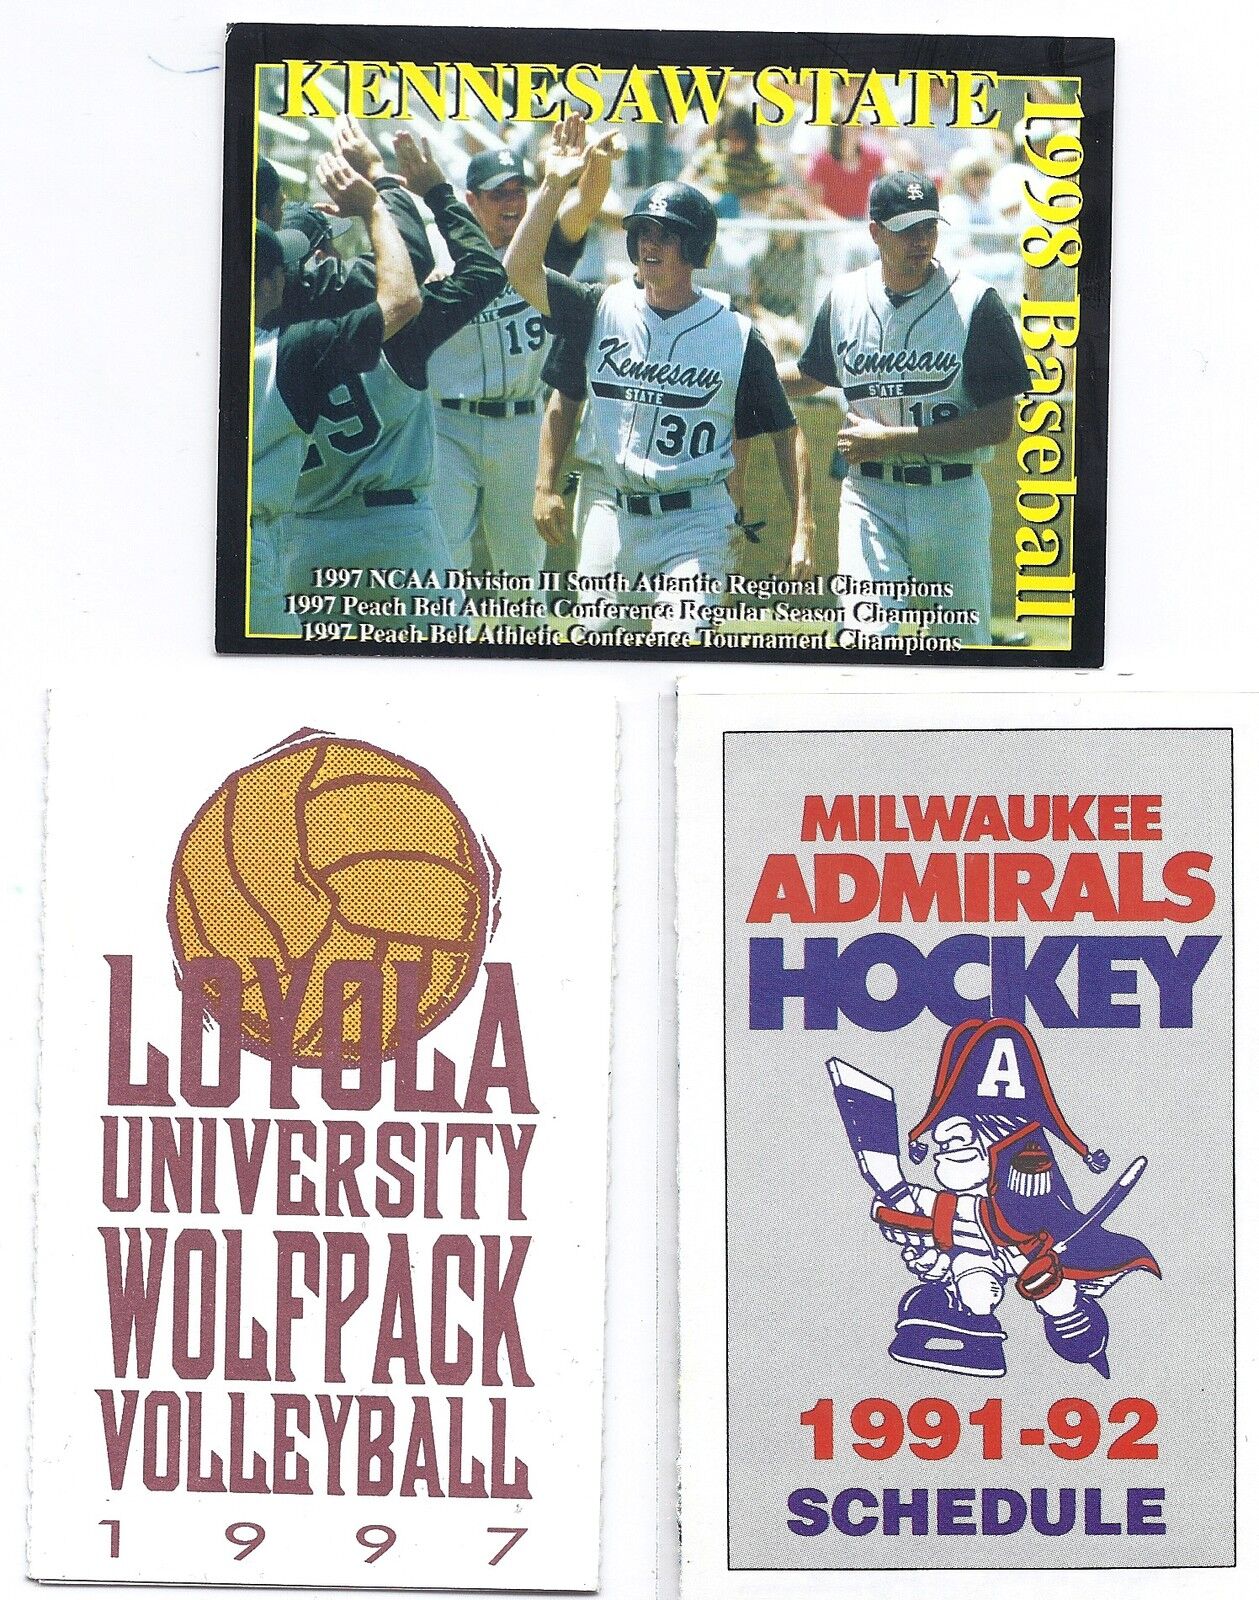 1997 Loyola University Wolfpack Volleyball Pocket Schedule